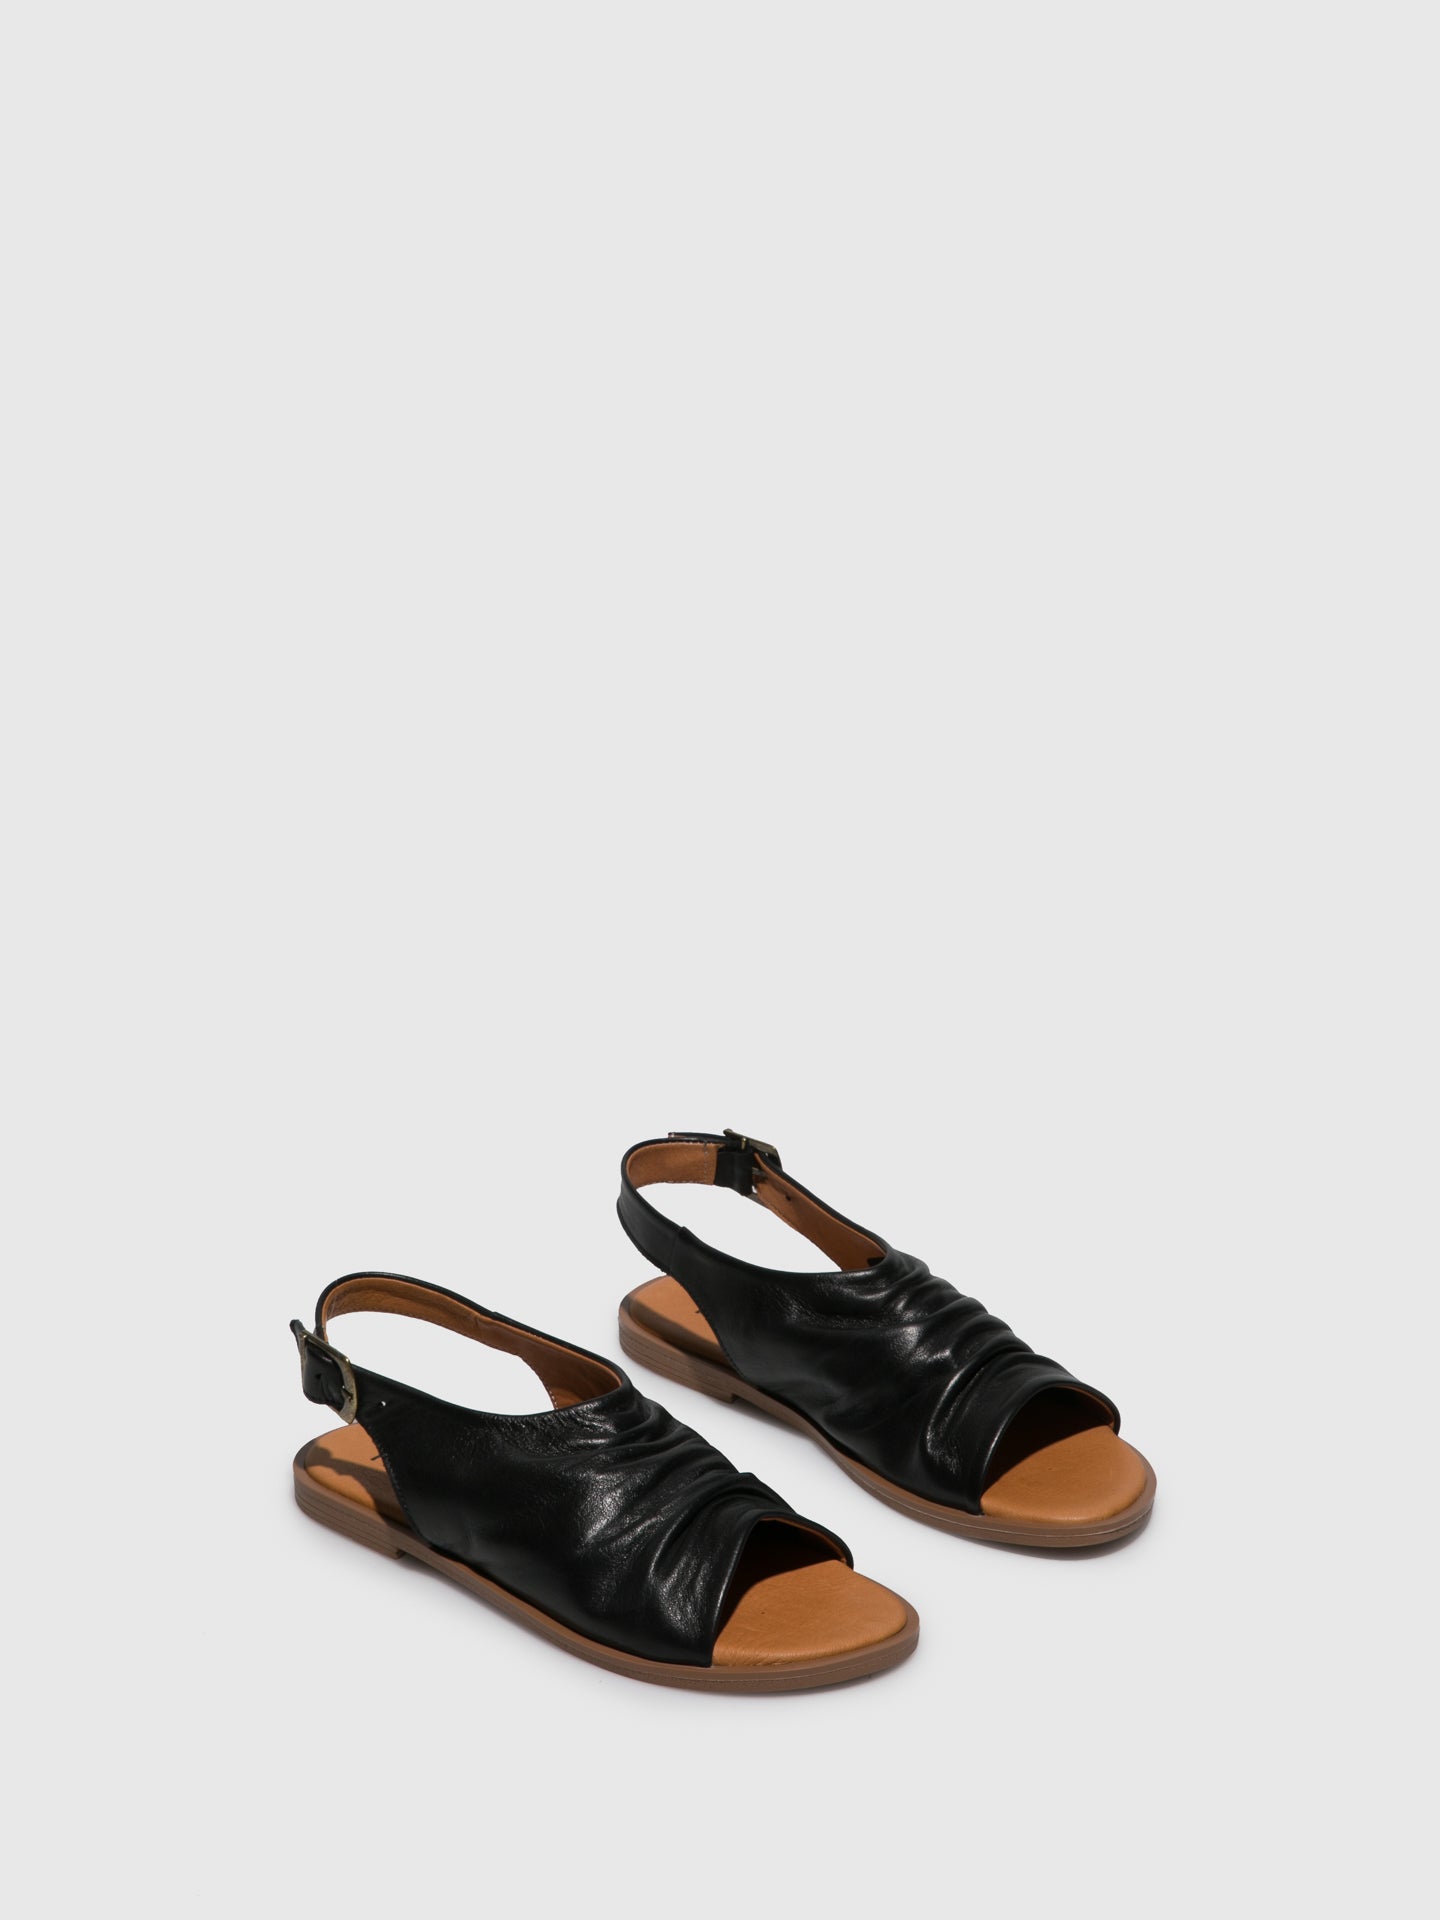 Foreva Black Sling-Back Sandals